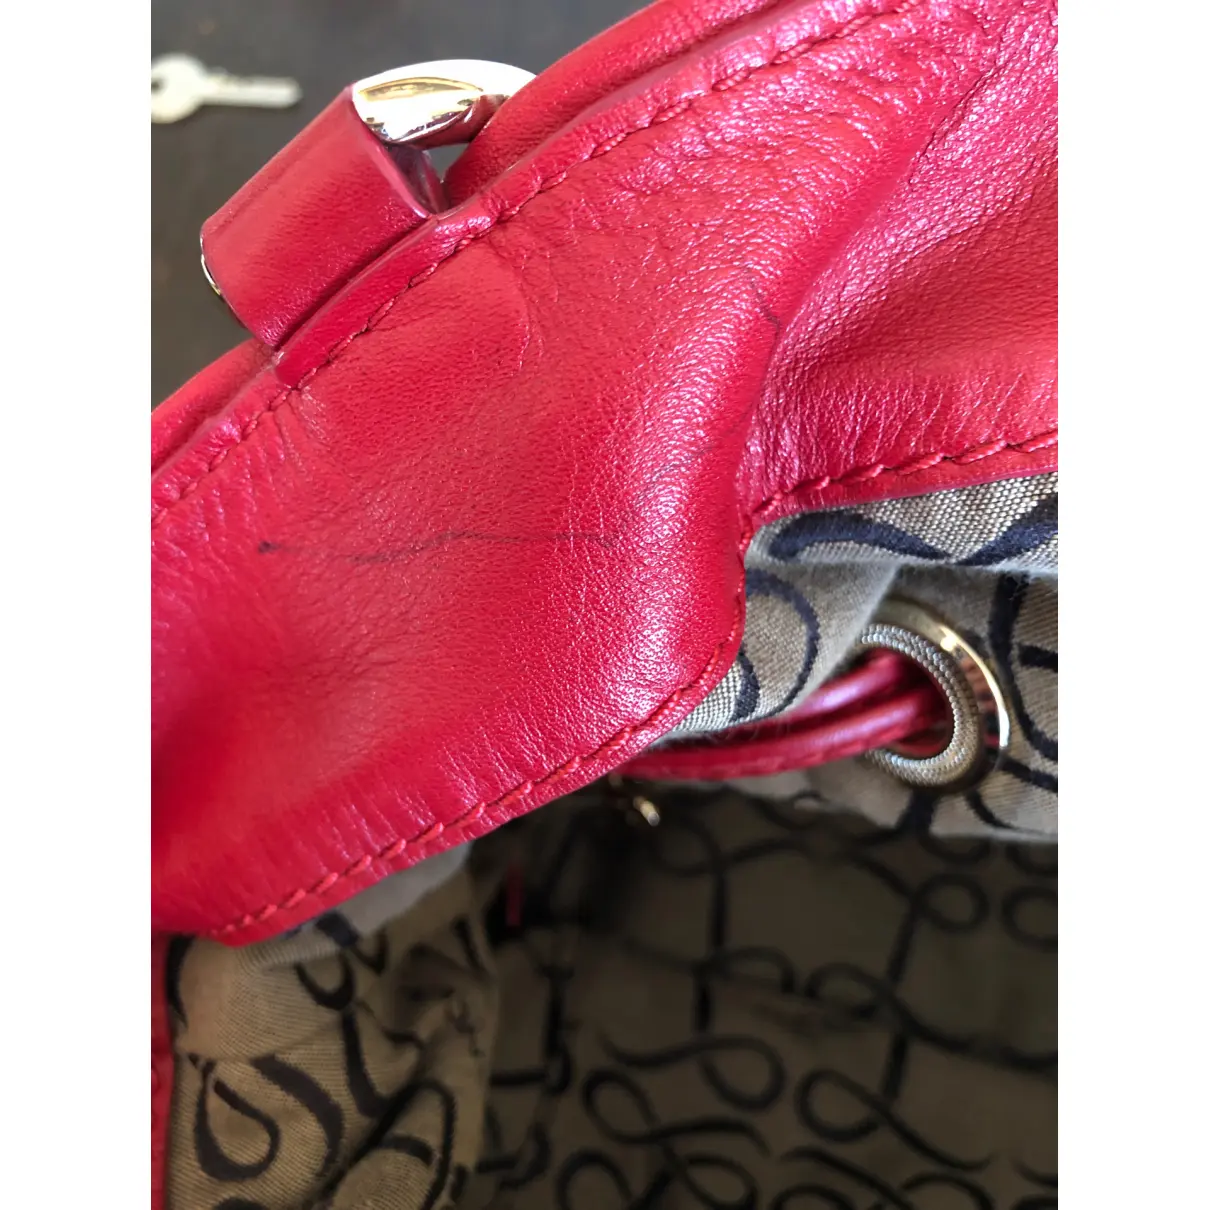 1er Flirt leather bag Lancel